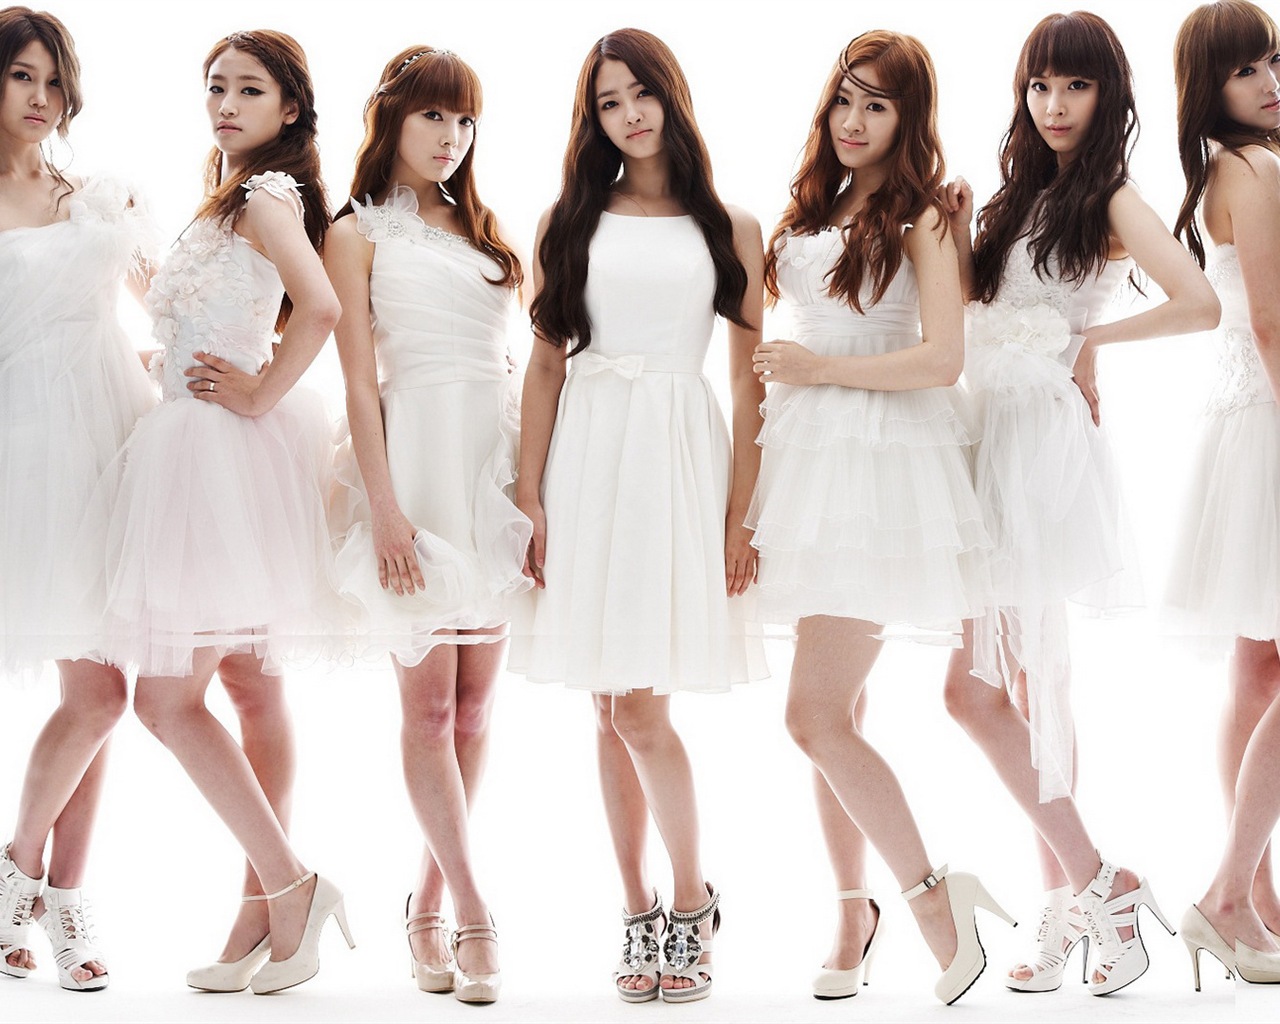 CHI CHI Korean music girl group HD Wallpapers #5 - 1280x1024